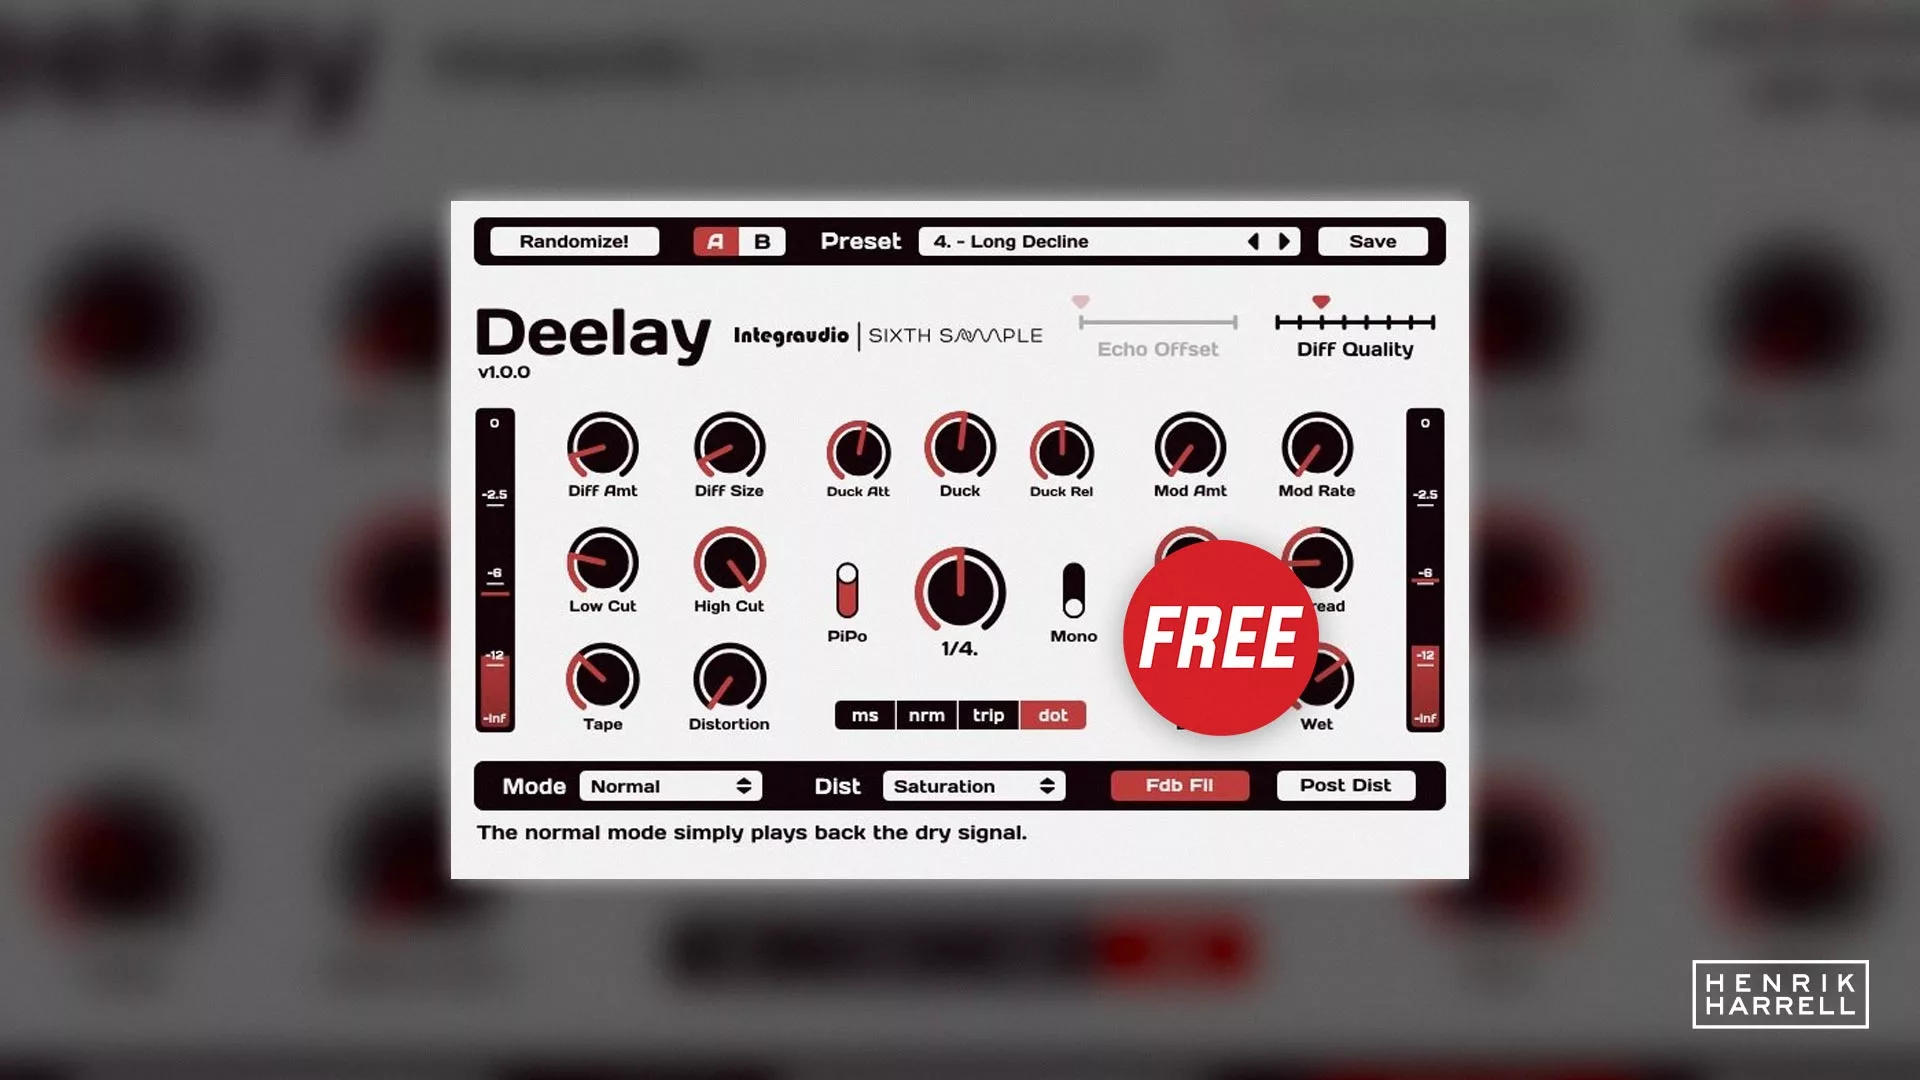 Integraudio & Sixth Sample Released Deelay a FREE Delay Plugin